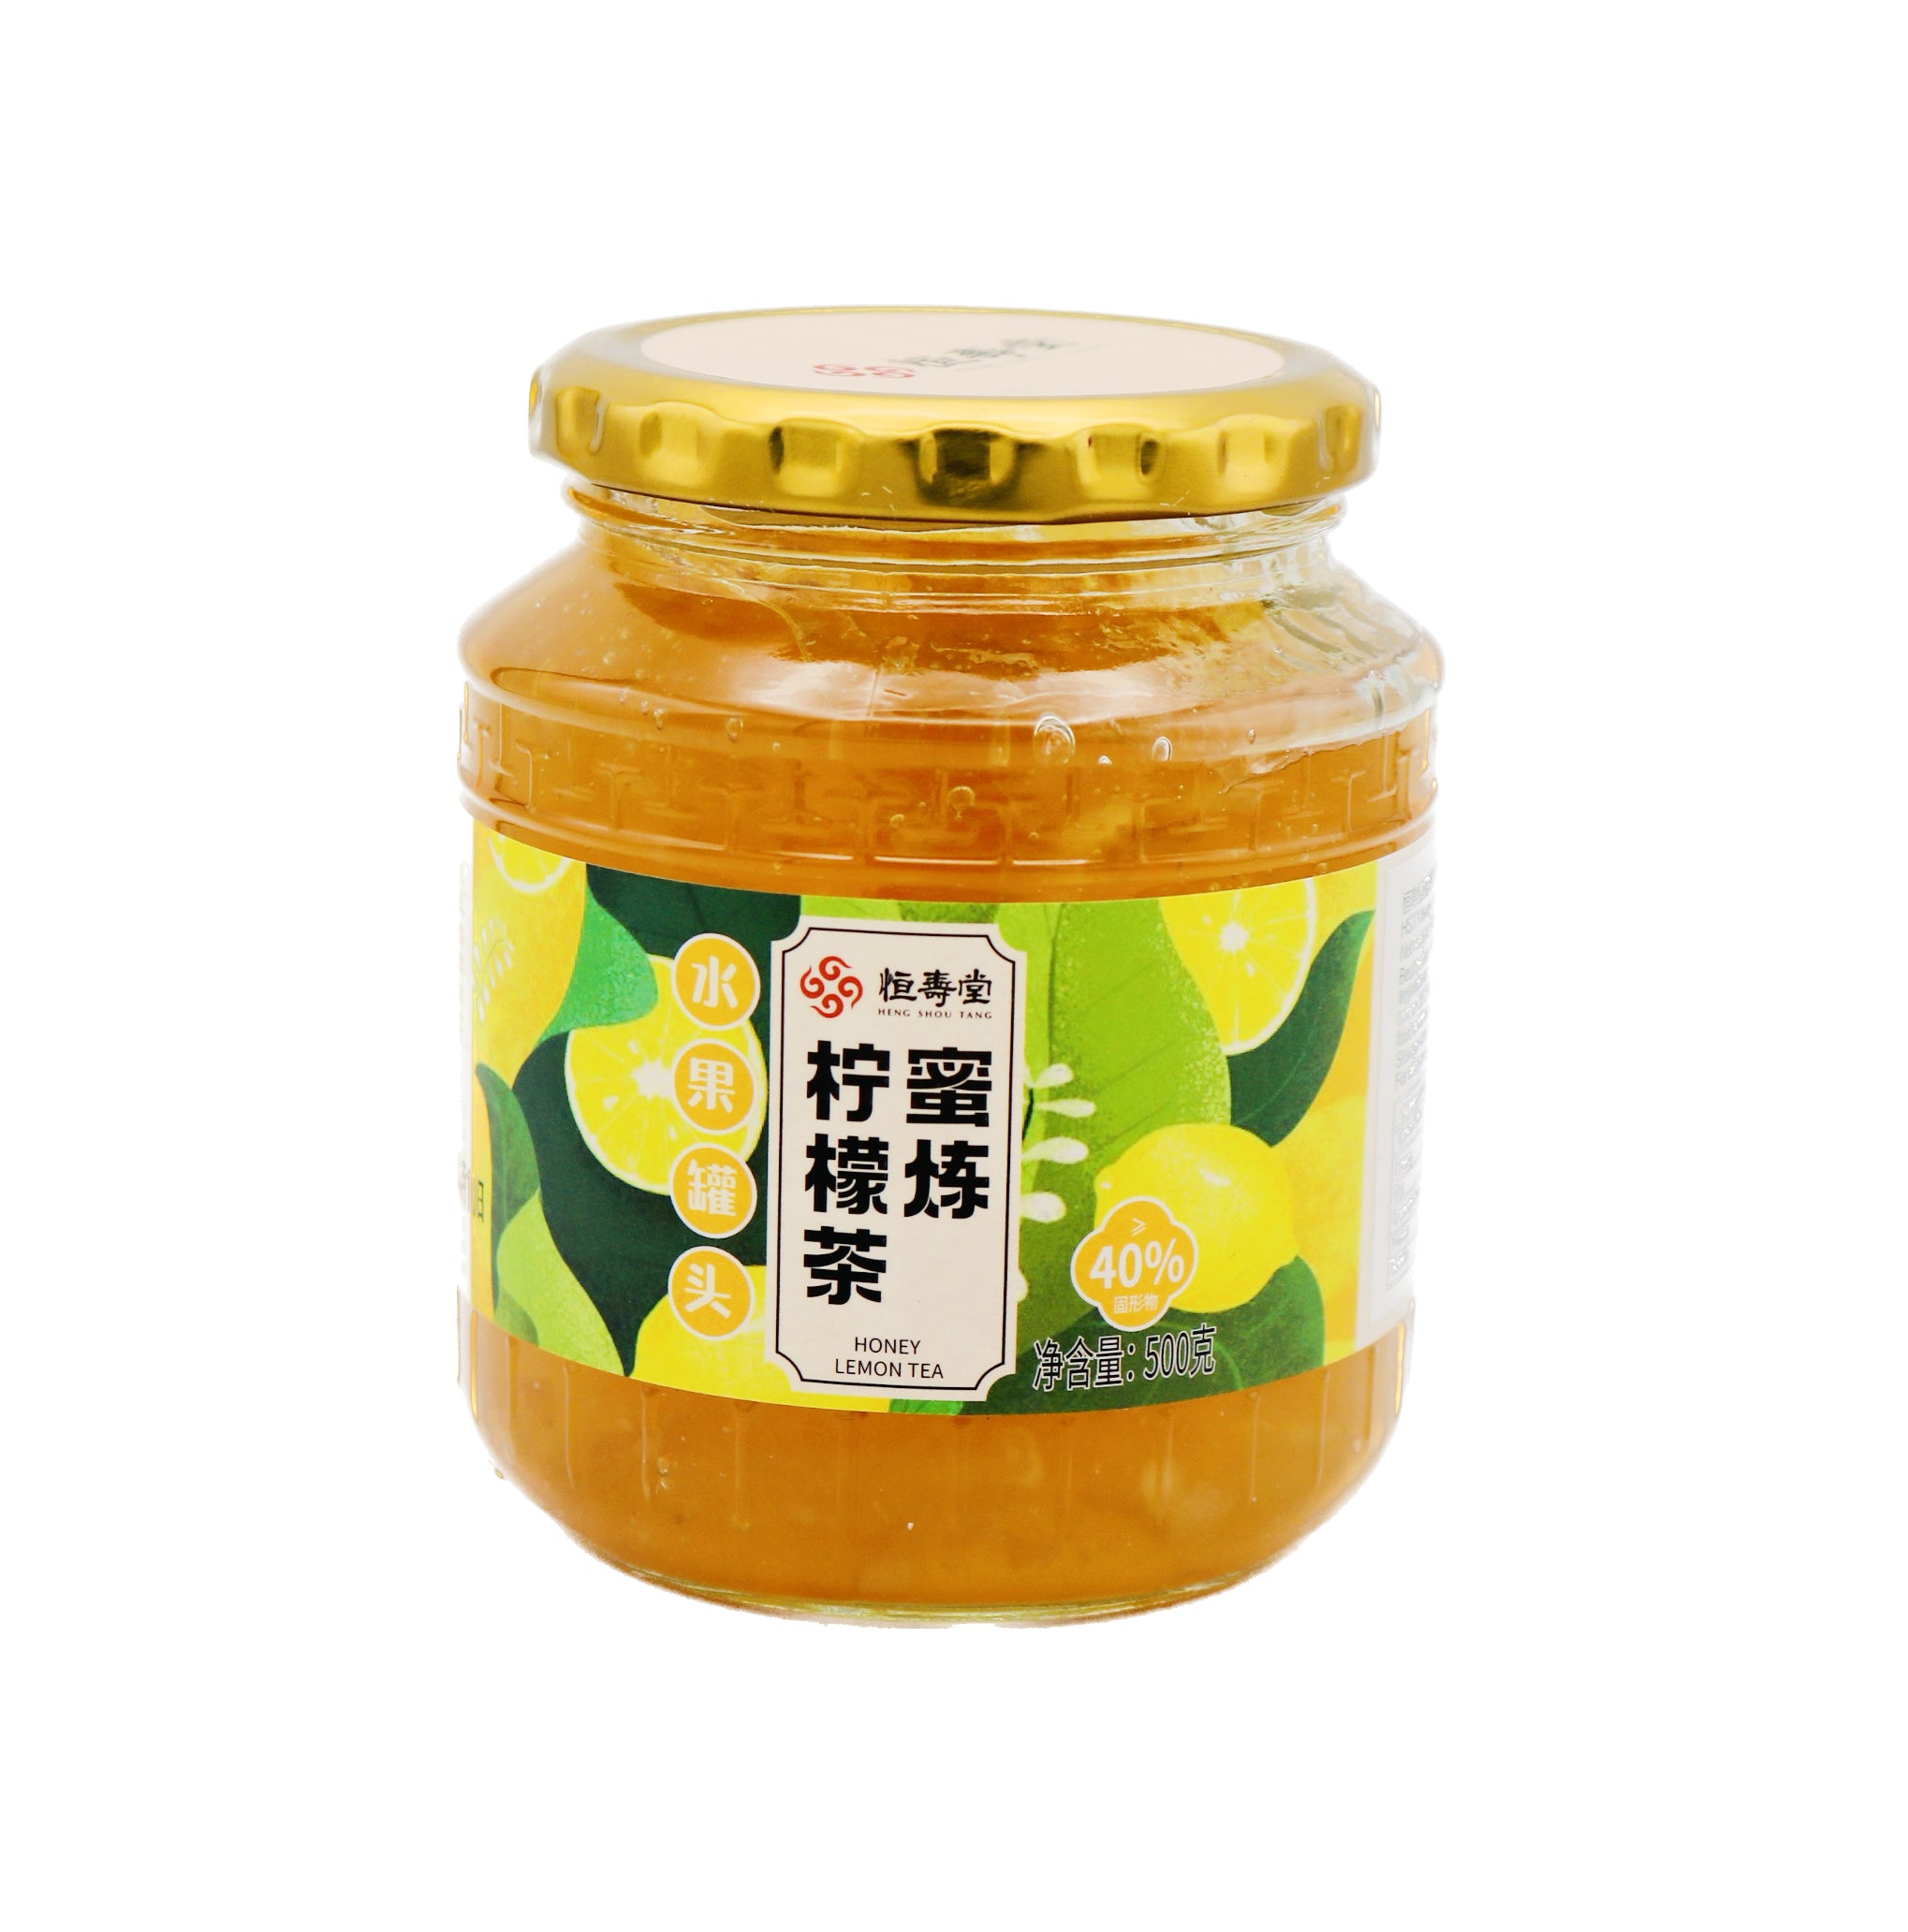 Heng Shou Tang Honey Lemon Tea 恆壽堂蜜煉檸檬茶 500g - Tuk Tuk Mart